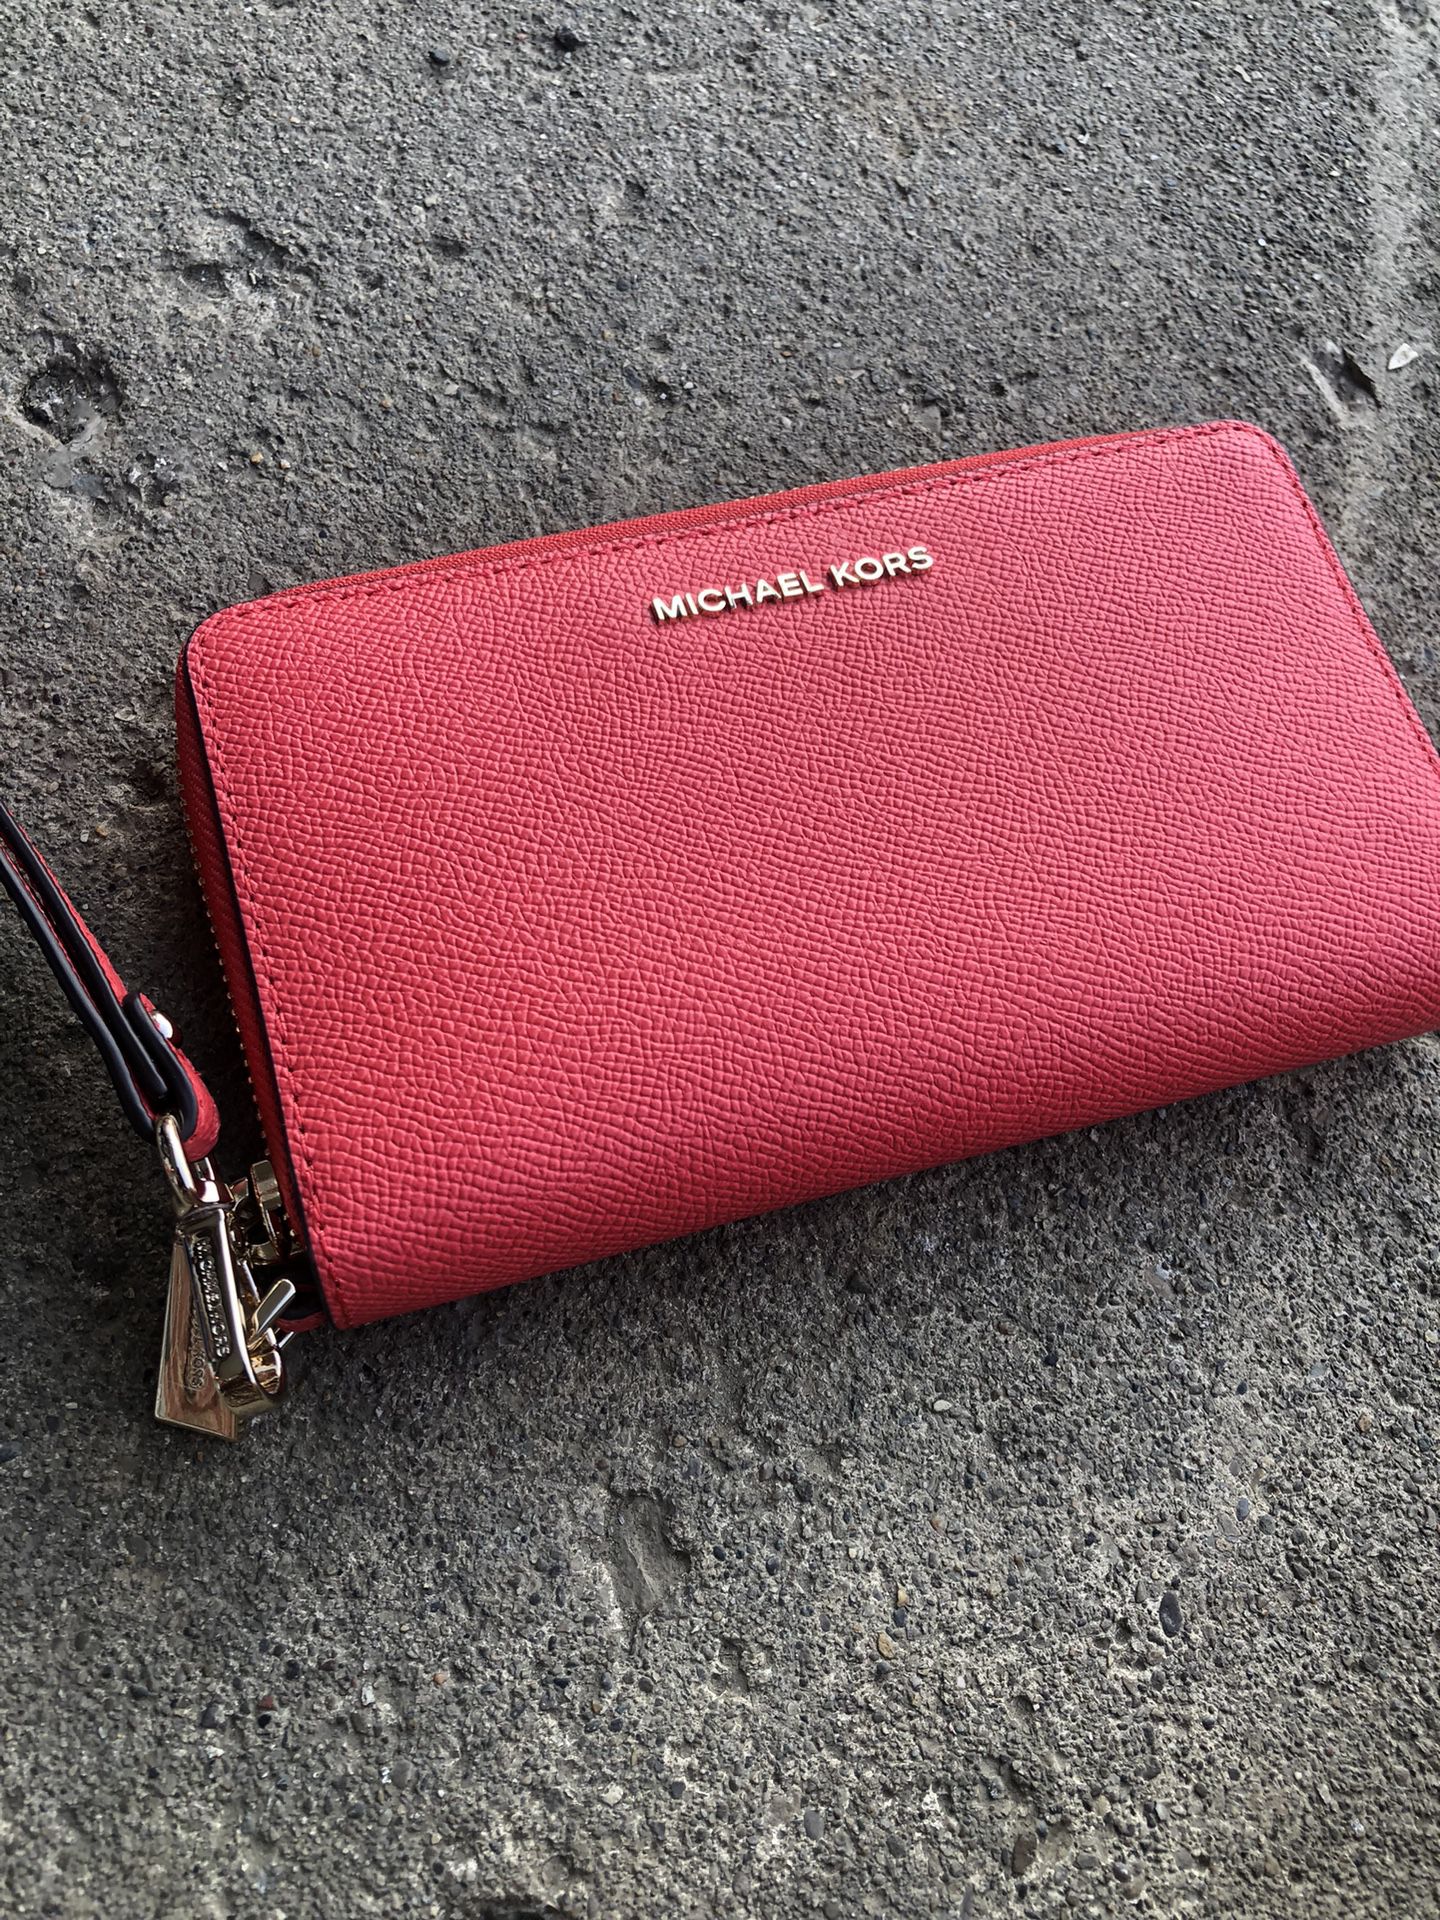 Michael Kors, pink leather wristlet/Wallet 